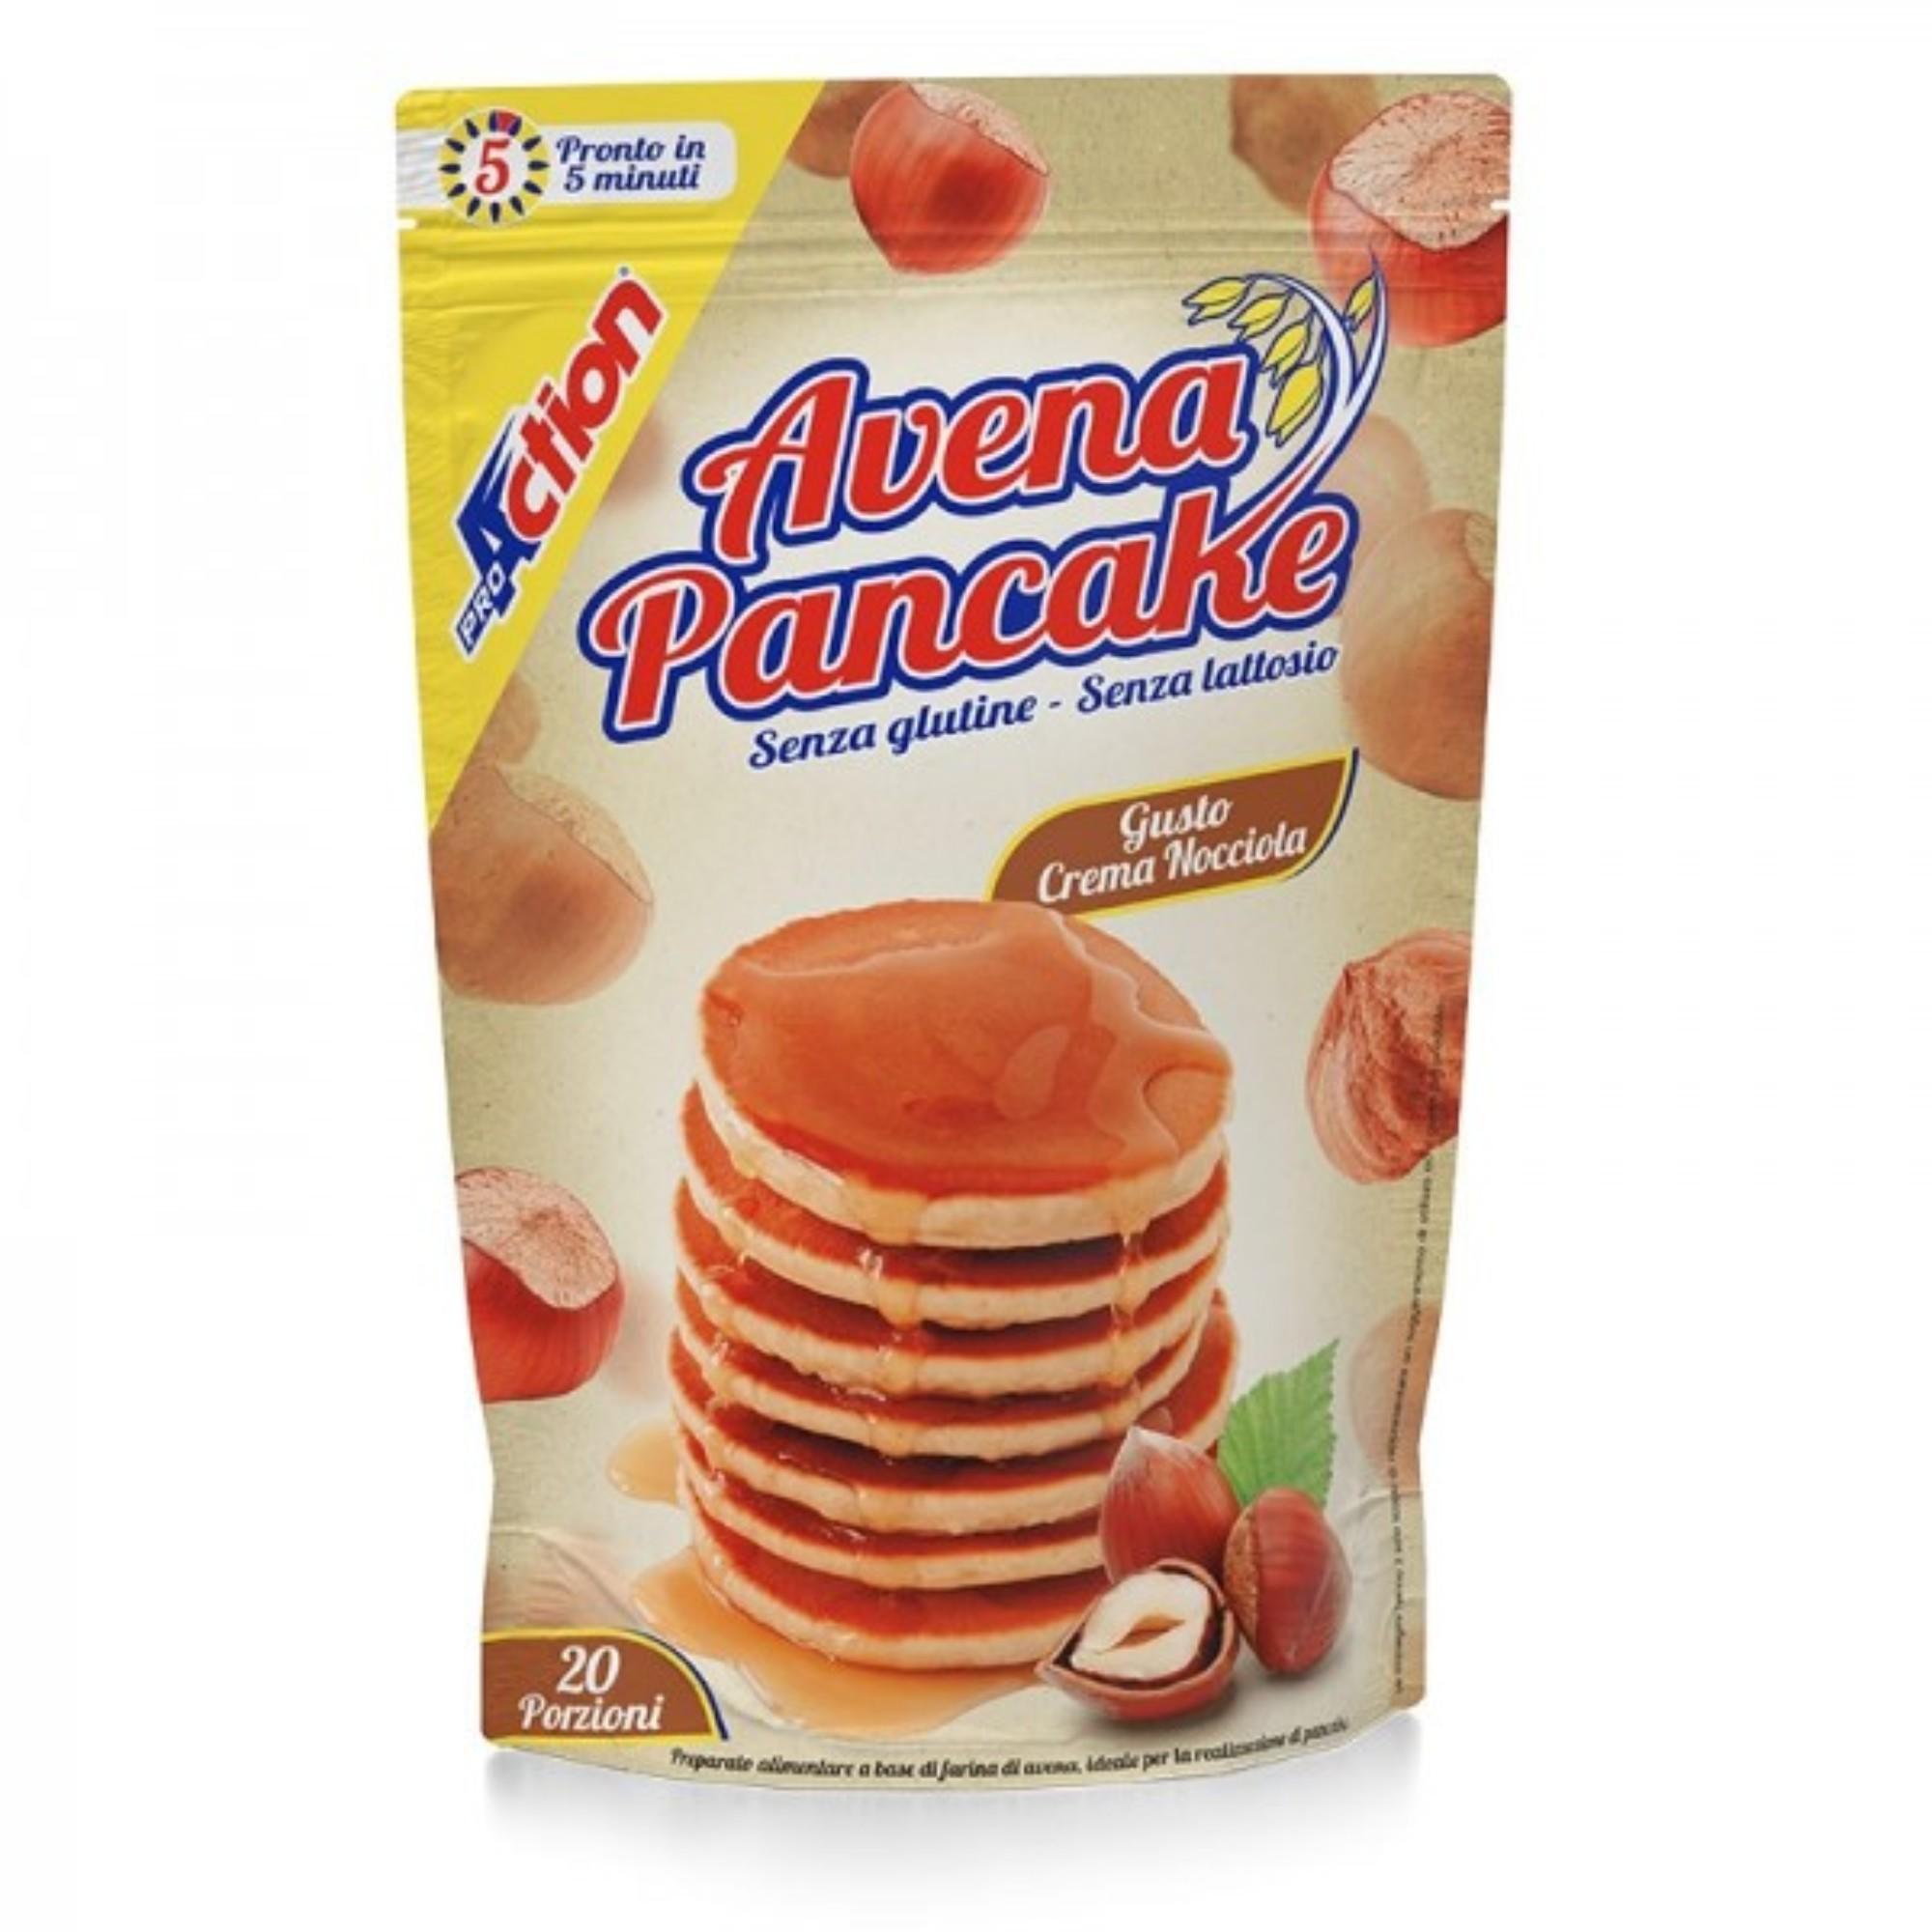 Decathlon | Avena pancake Proaction senza glutine e senza lattosio gusto crema nocciola 1kg |  Proaction